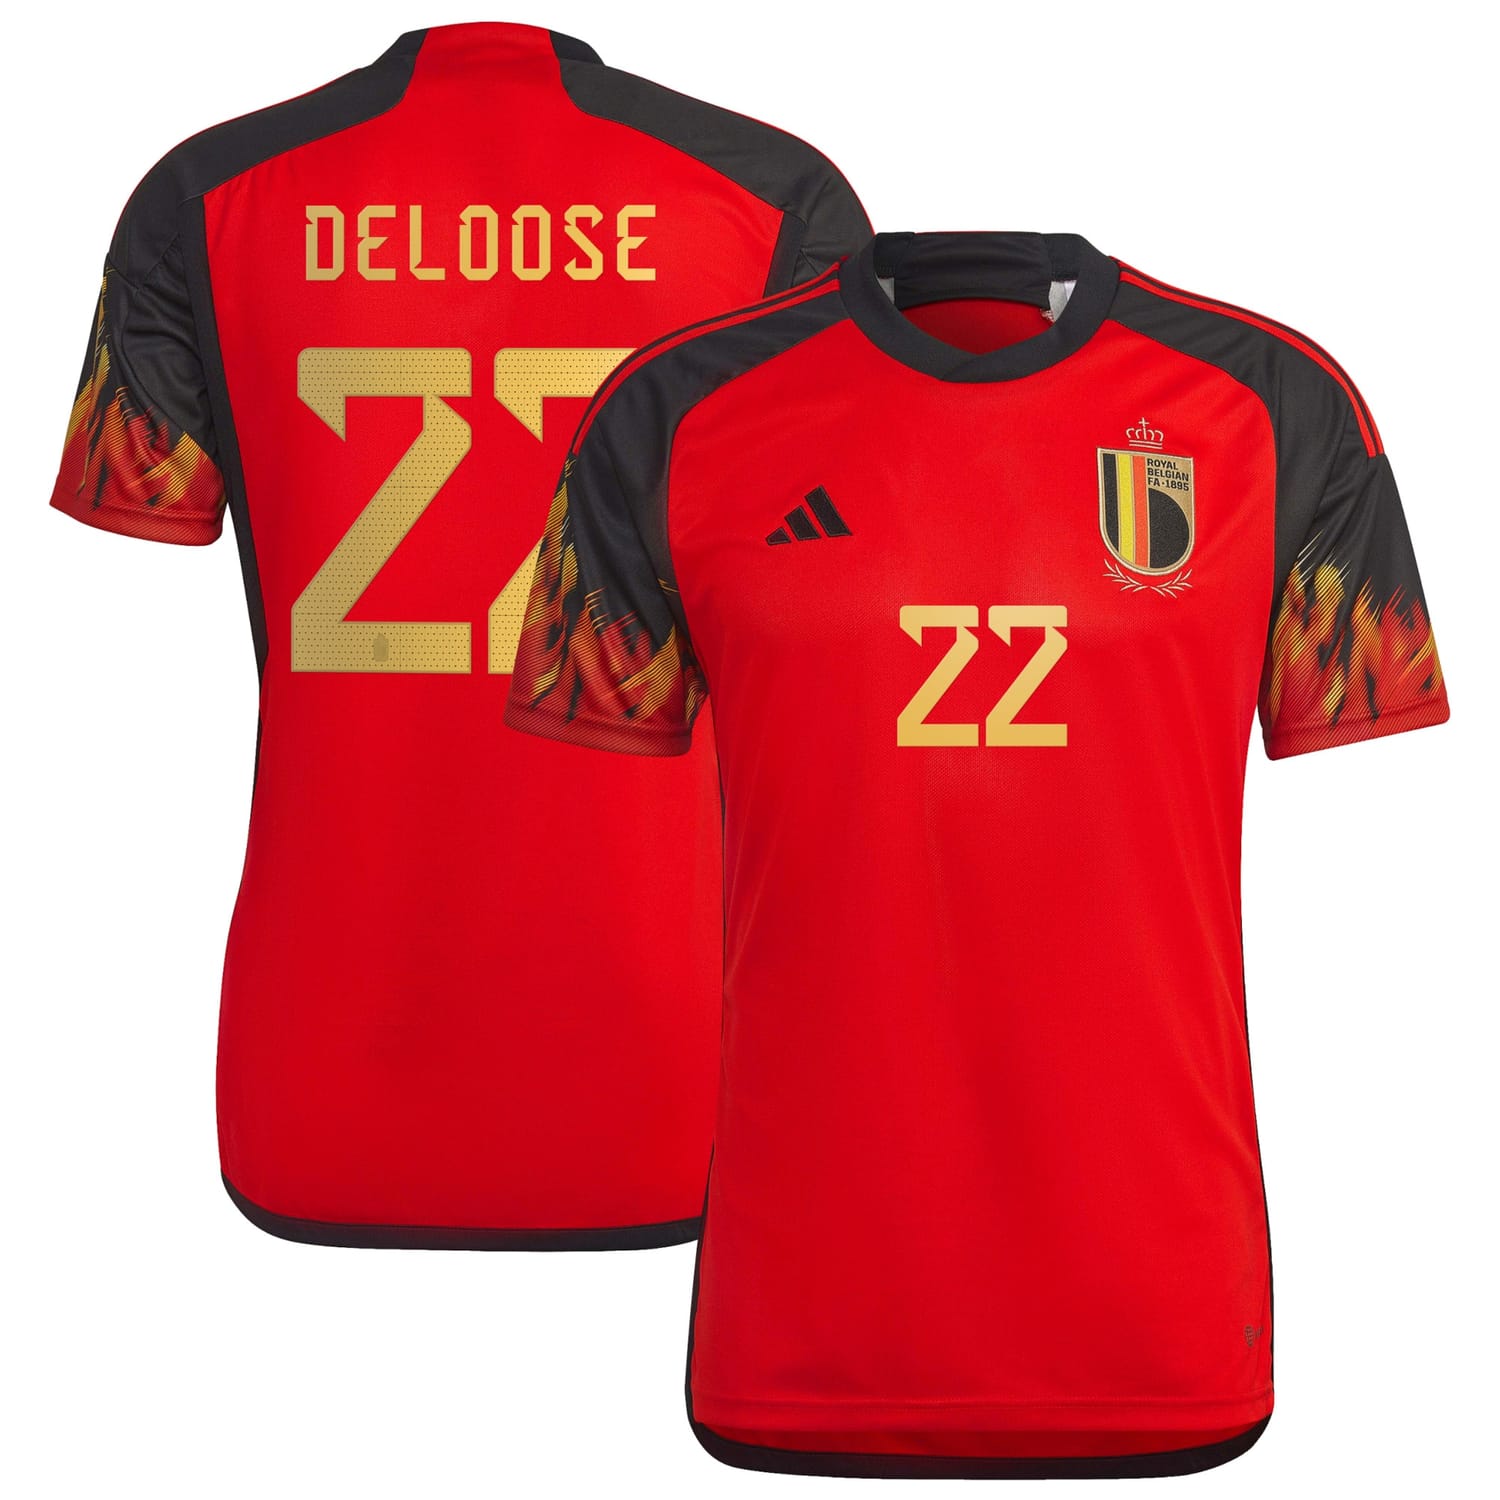 Belgium National Team Home Jersey Shirt 2022 player Laura Deloose 22 printing for Men